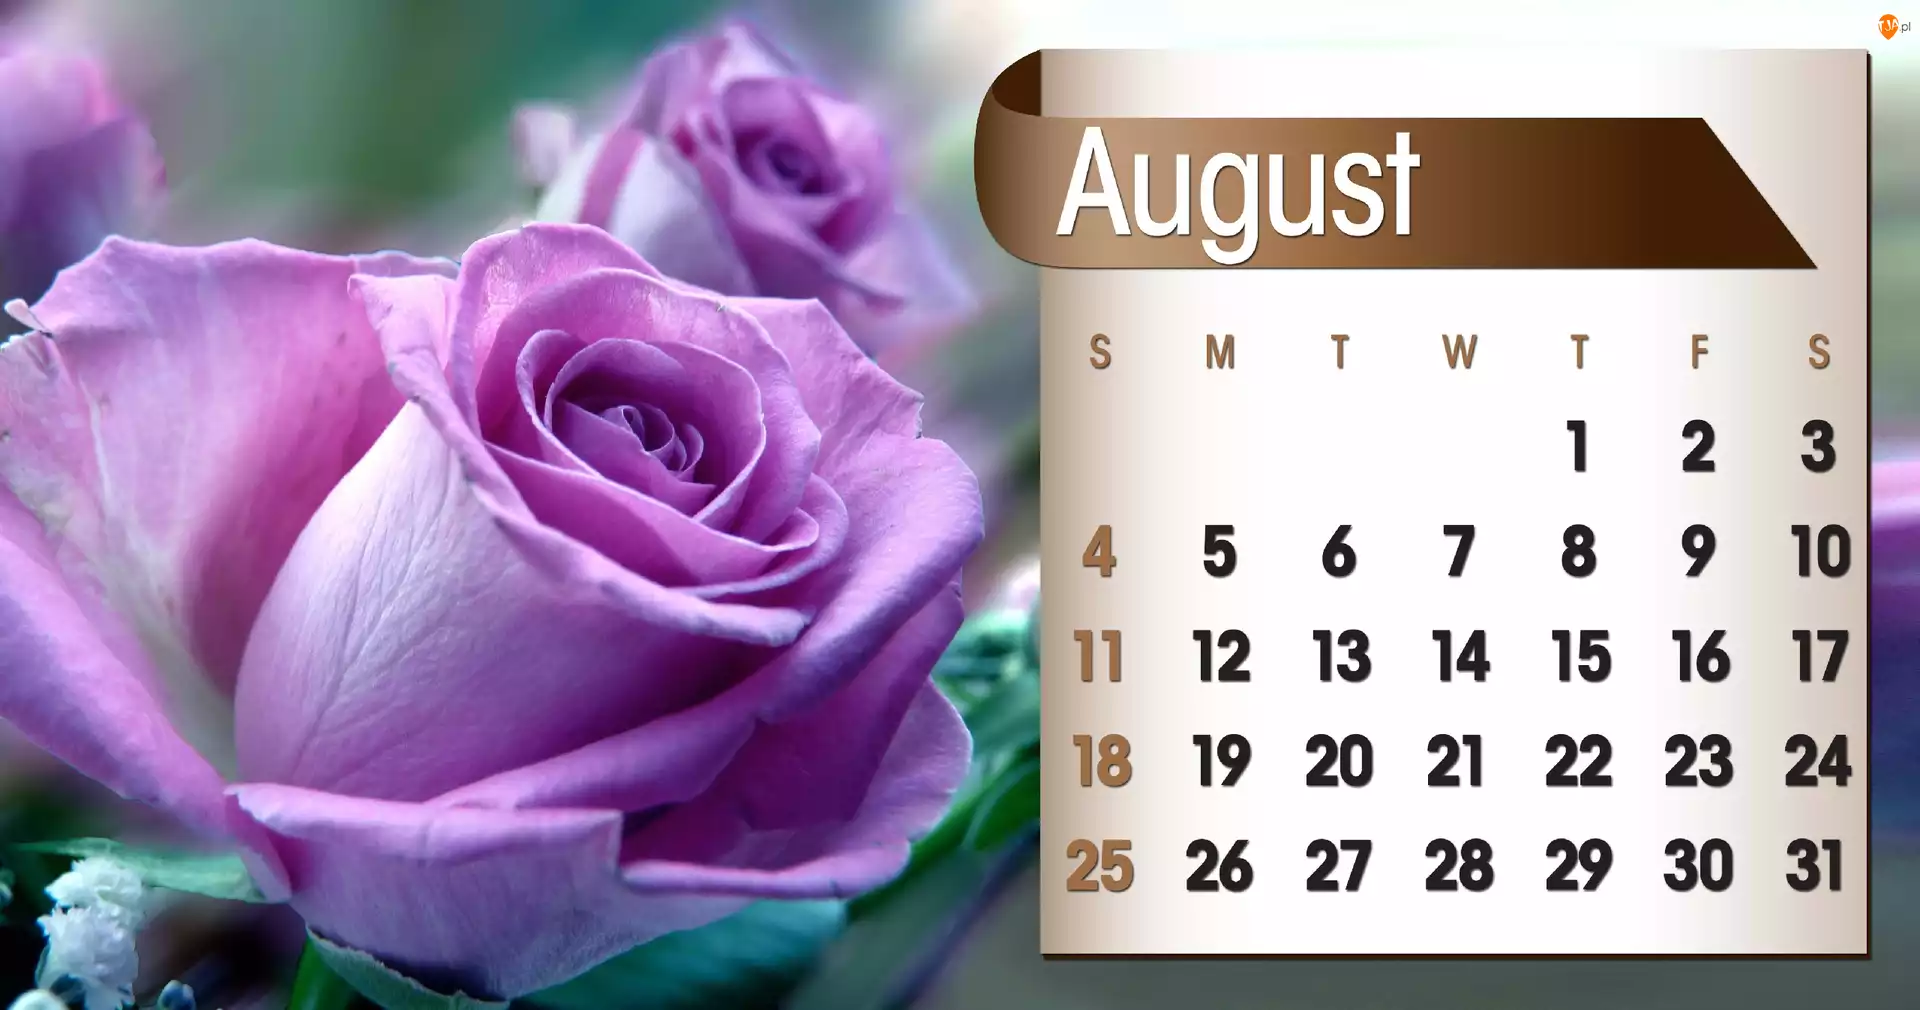 Kalendarz, 2013r, Róża, Sierpień